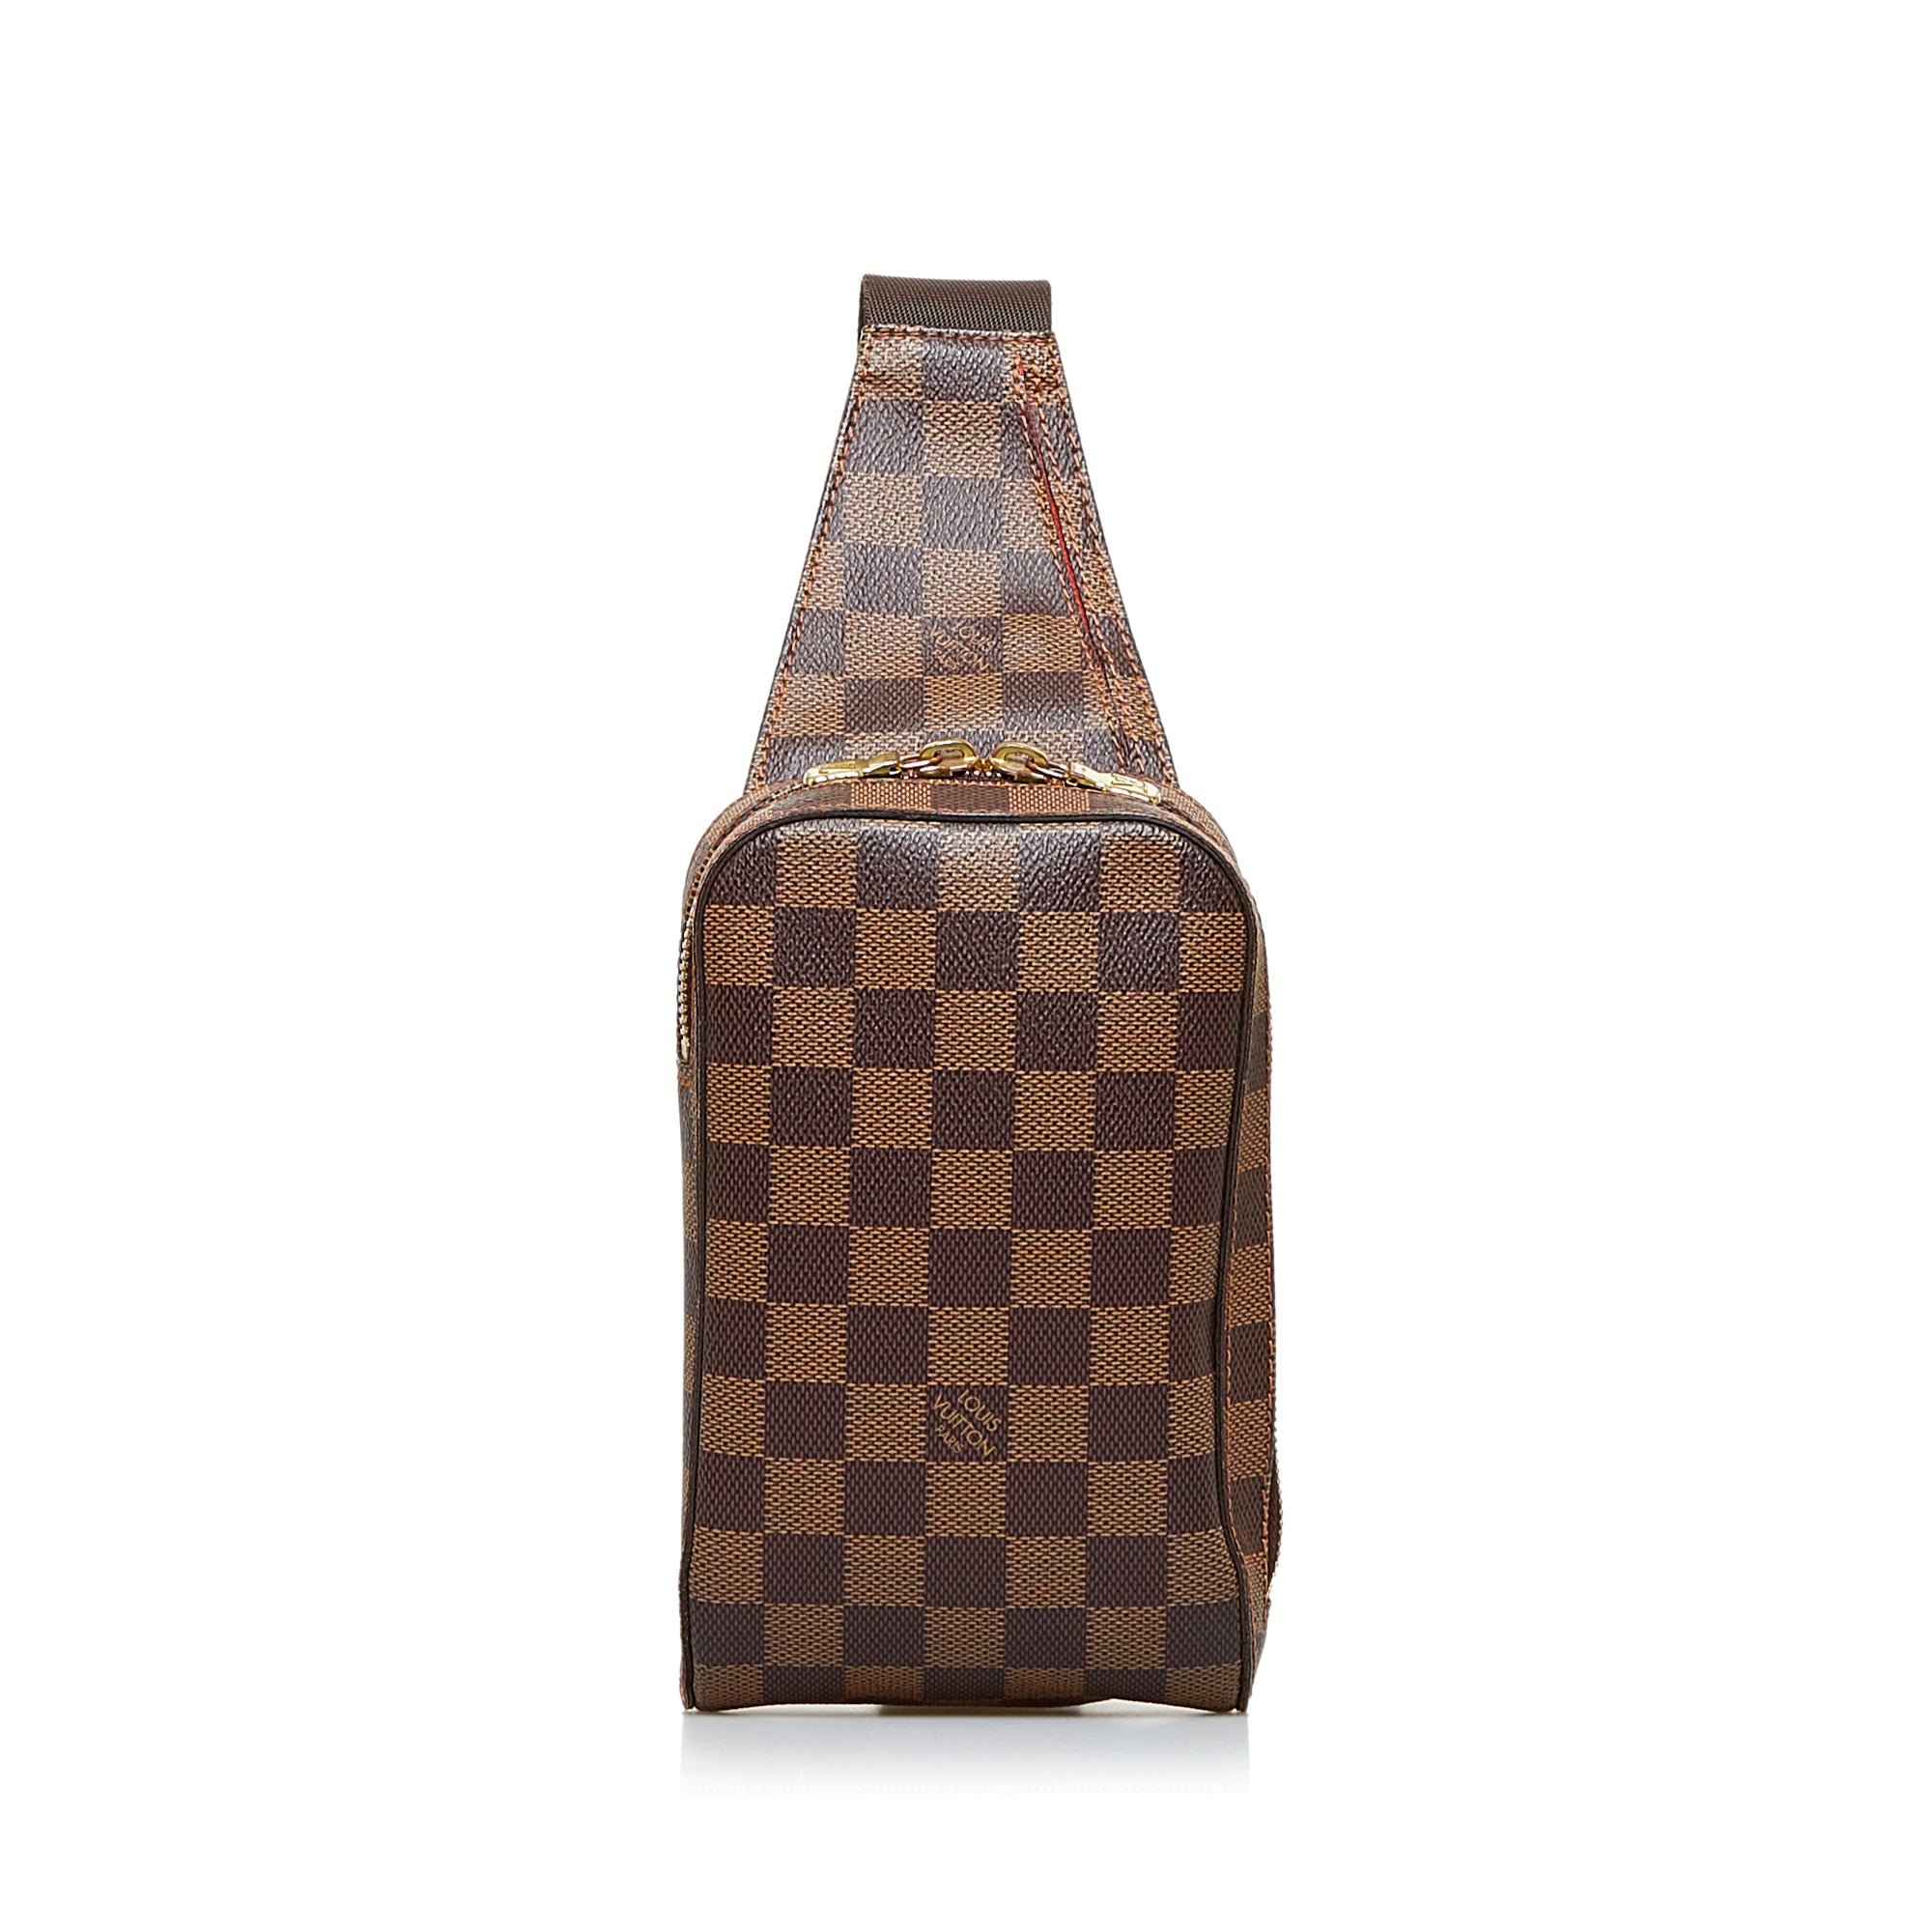 Louis-Vuitton-Adjustable-Shoulder-Strap-for-Damier-Ebene-Bags